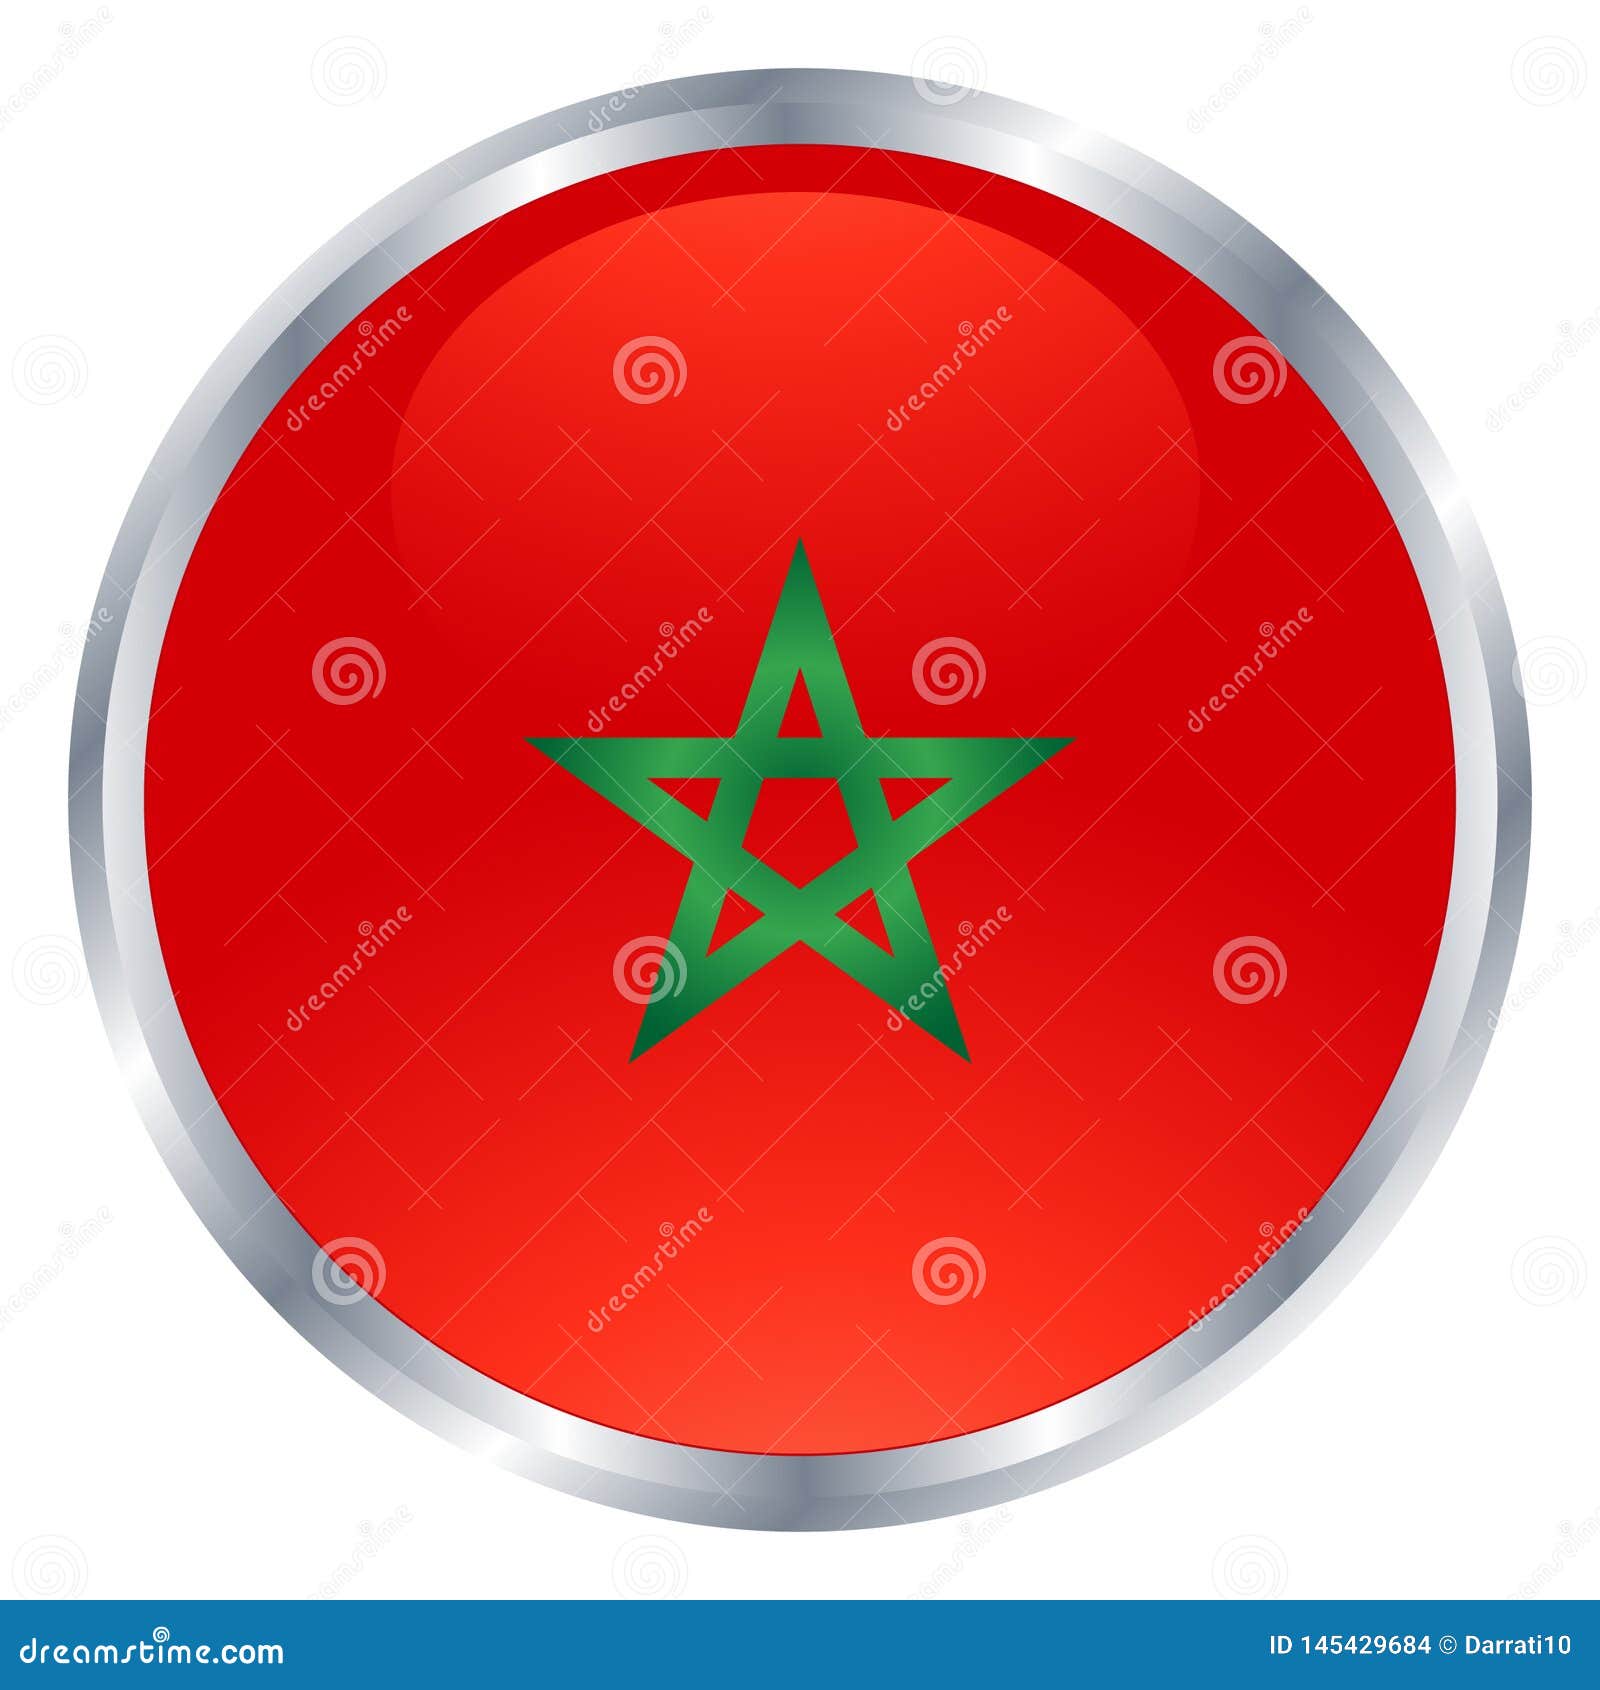 icon of morocco flag